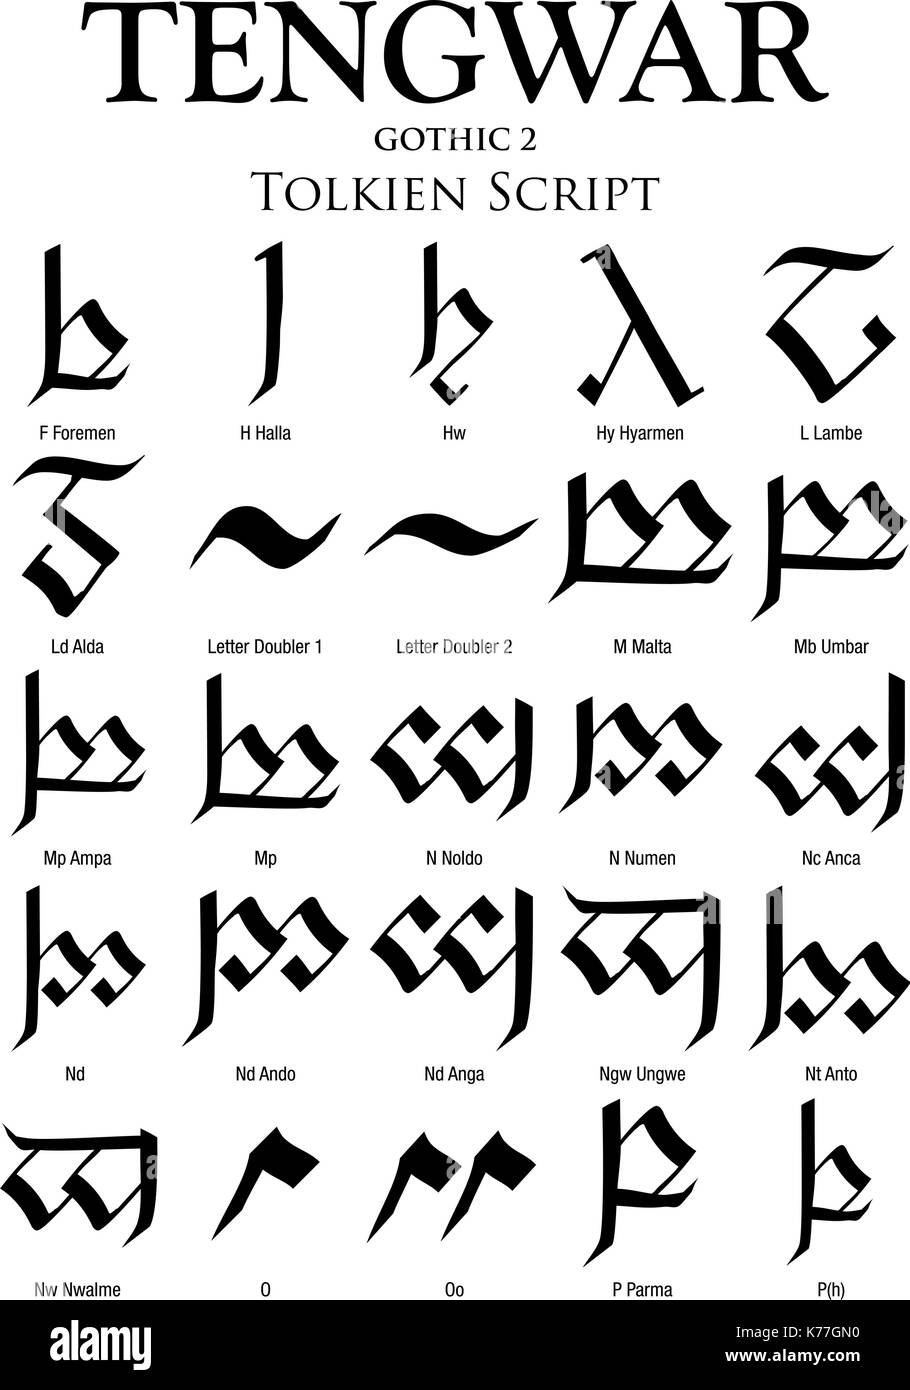 TENGWAR GOTHIC Alphabet  - Tolkien Script on white background - Vector Image Stock Vector